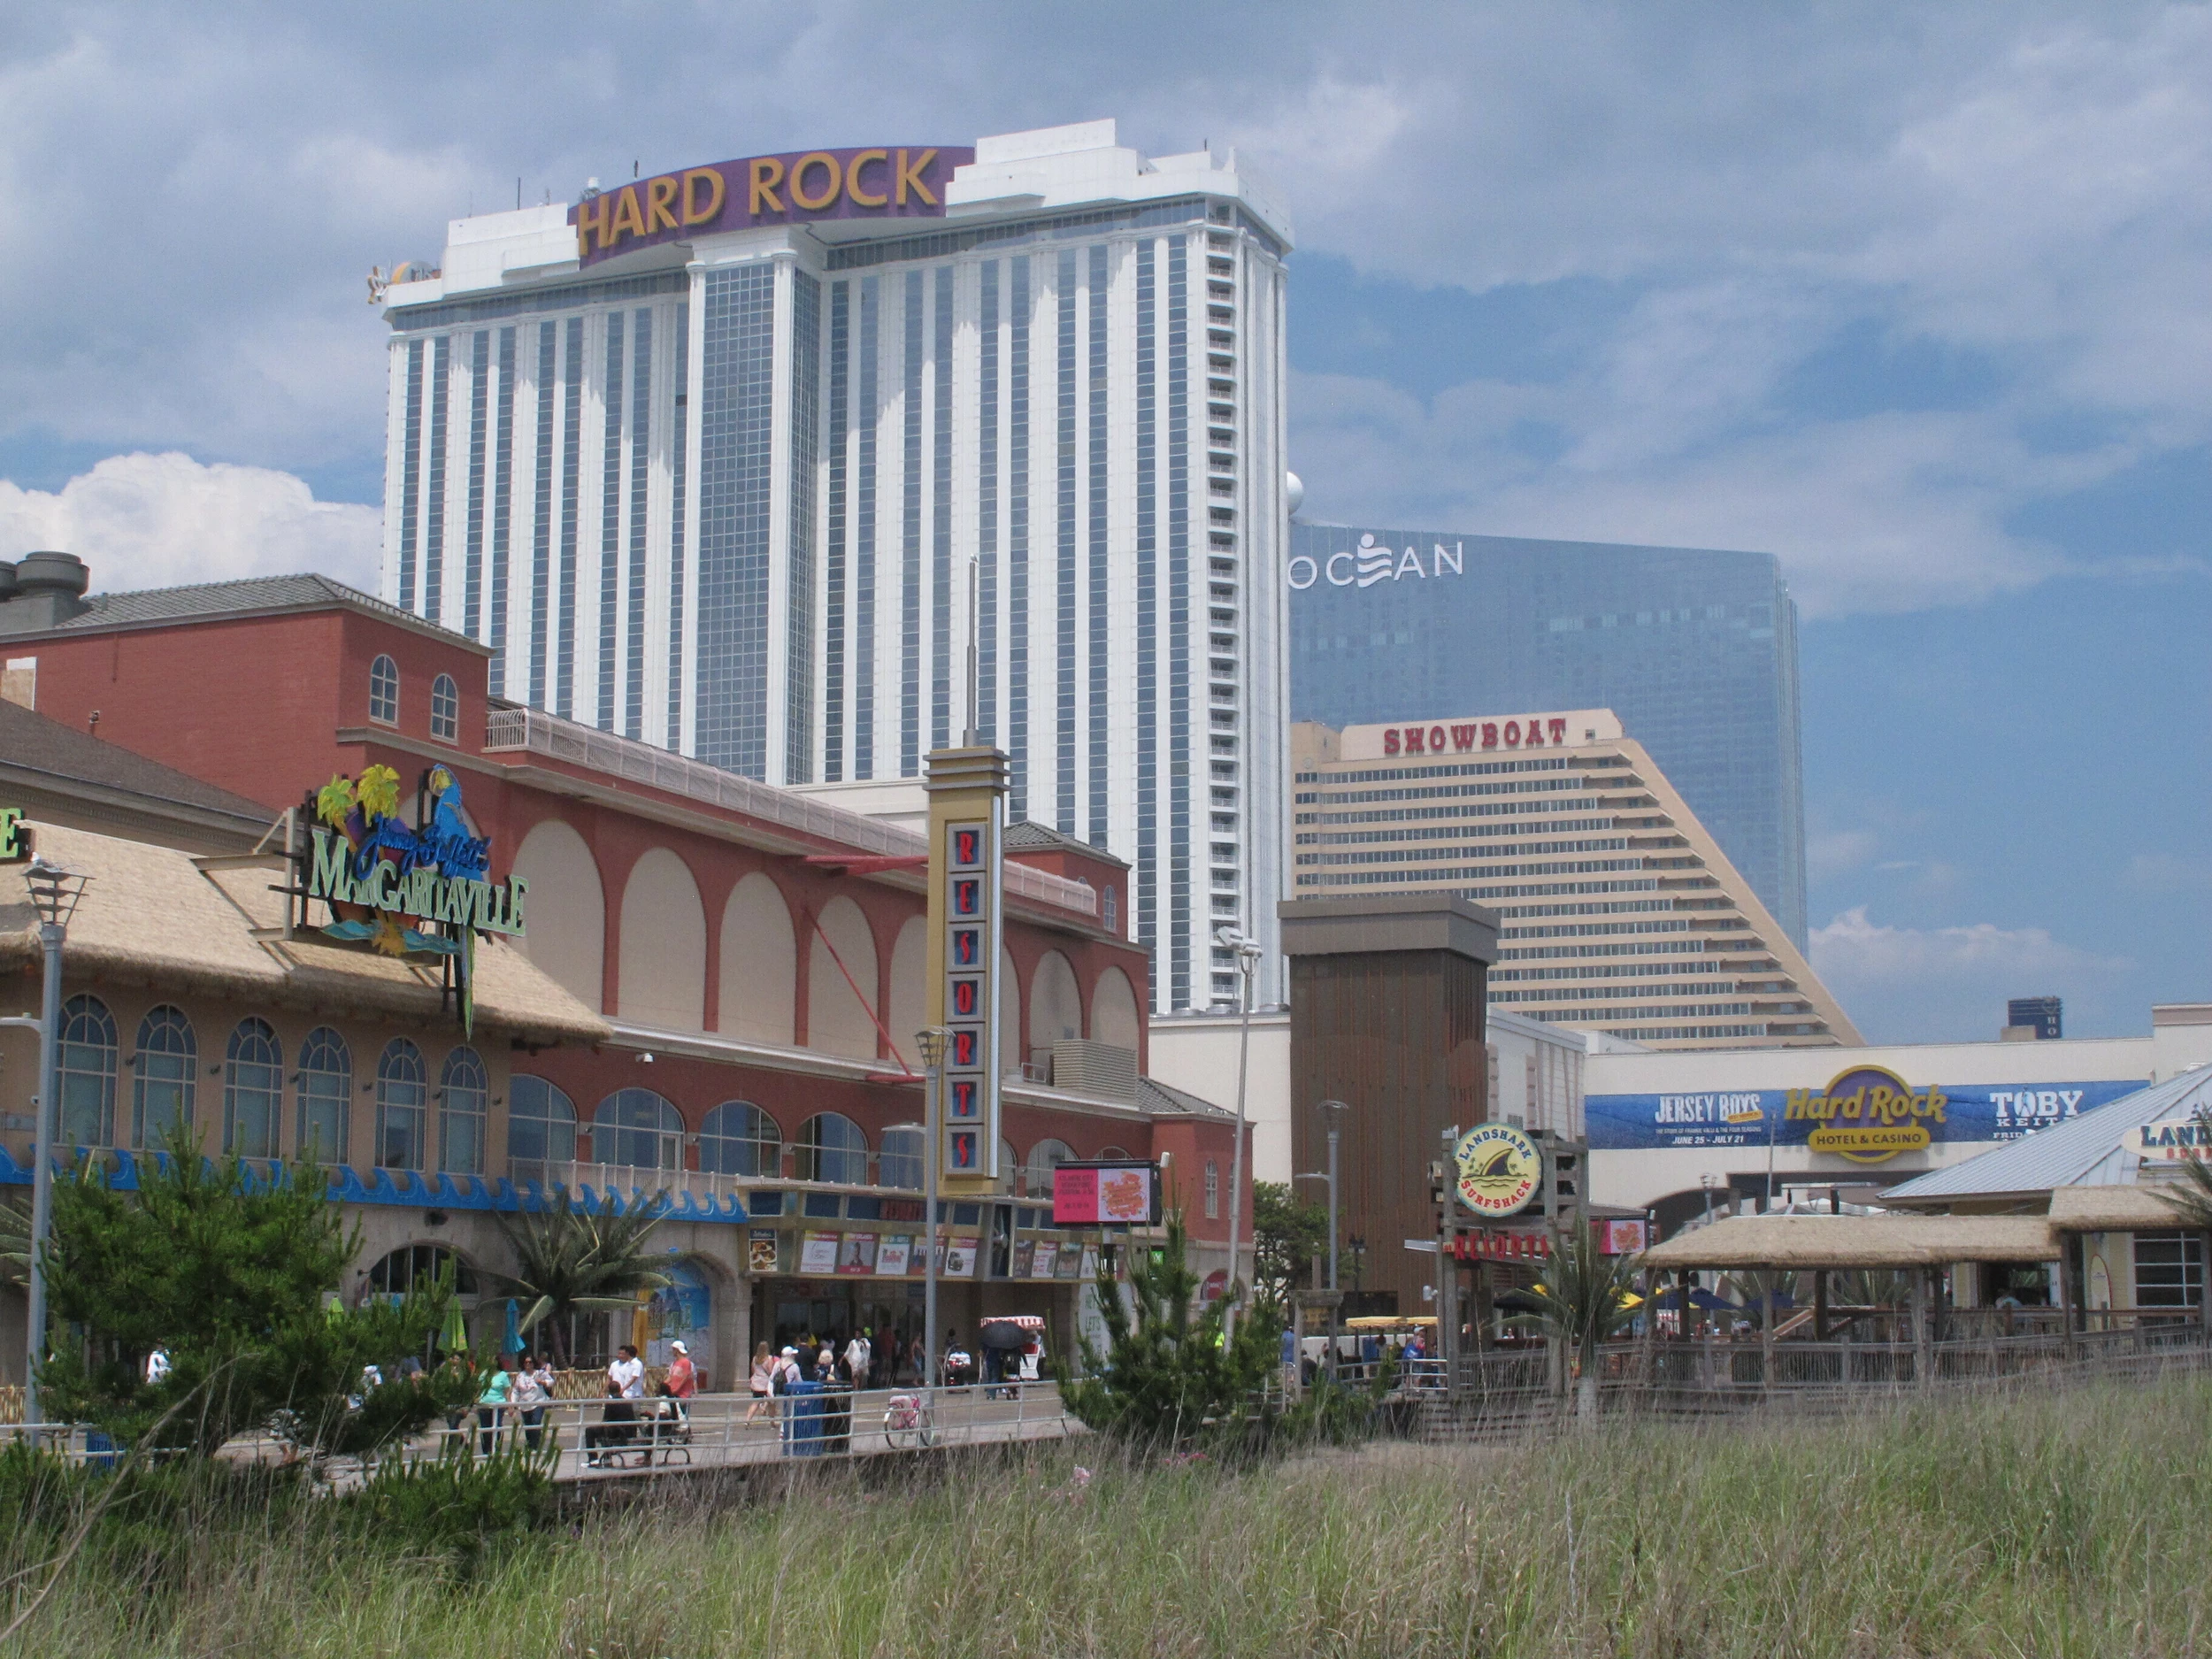 free parking casinos atlantic city